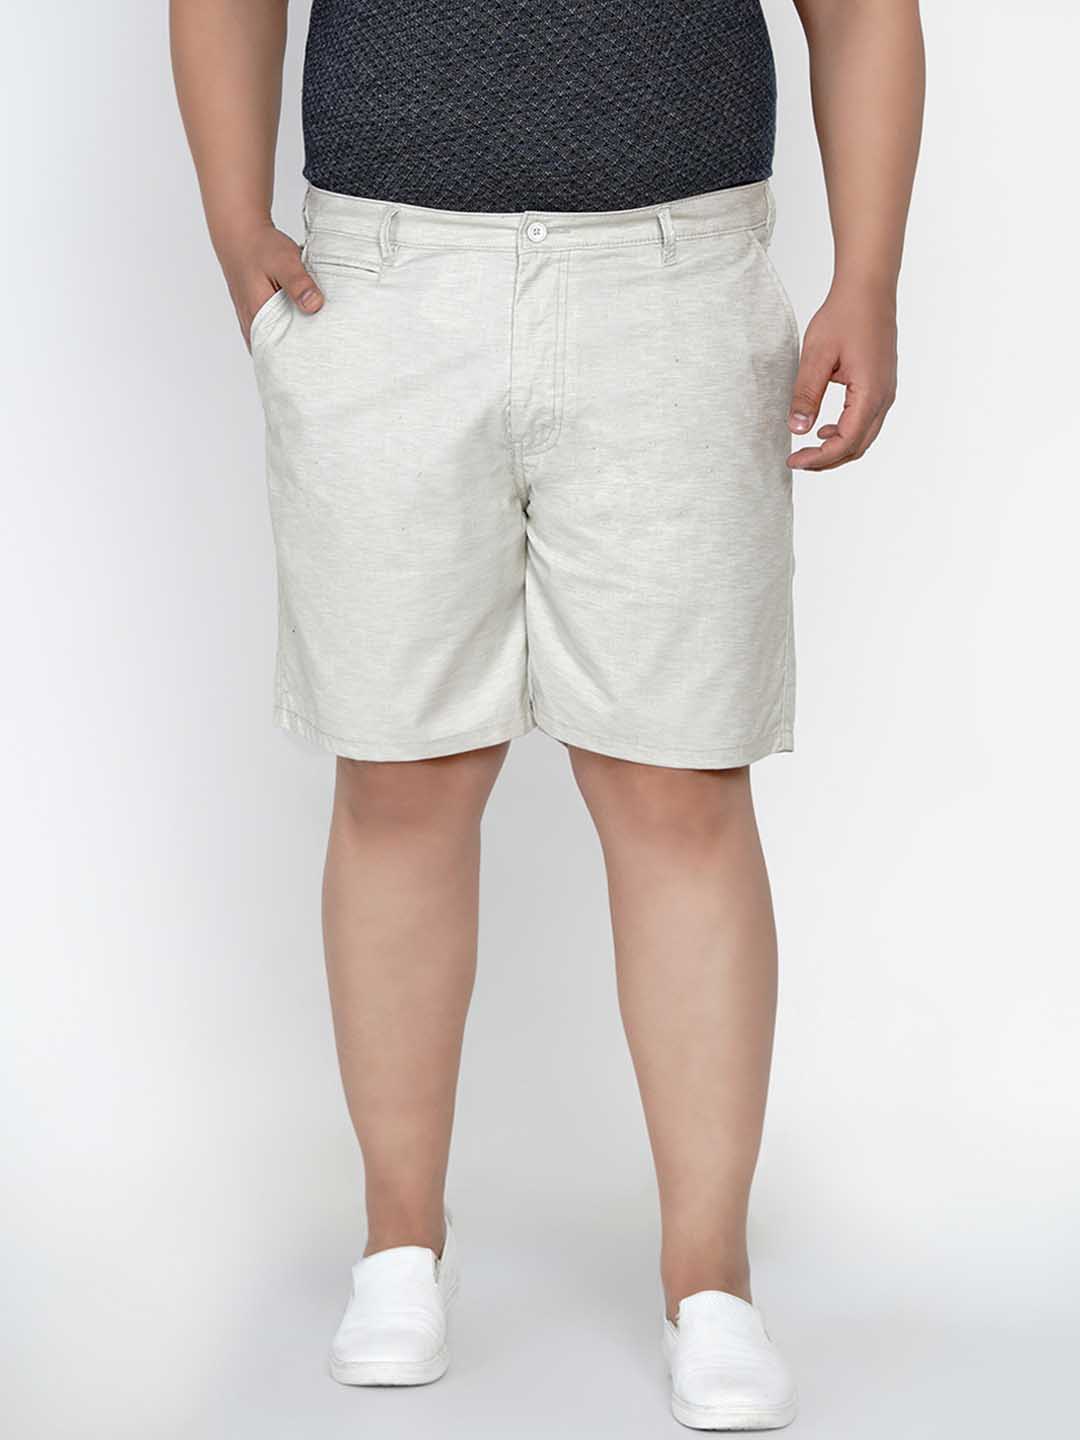 Ivory Gray Linen Chinos Shorts